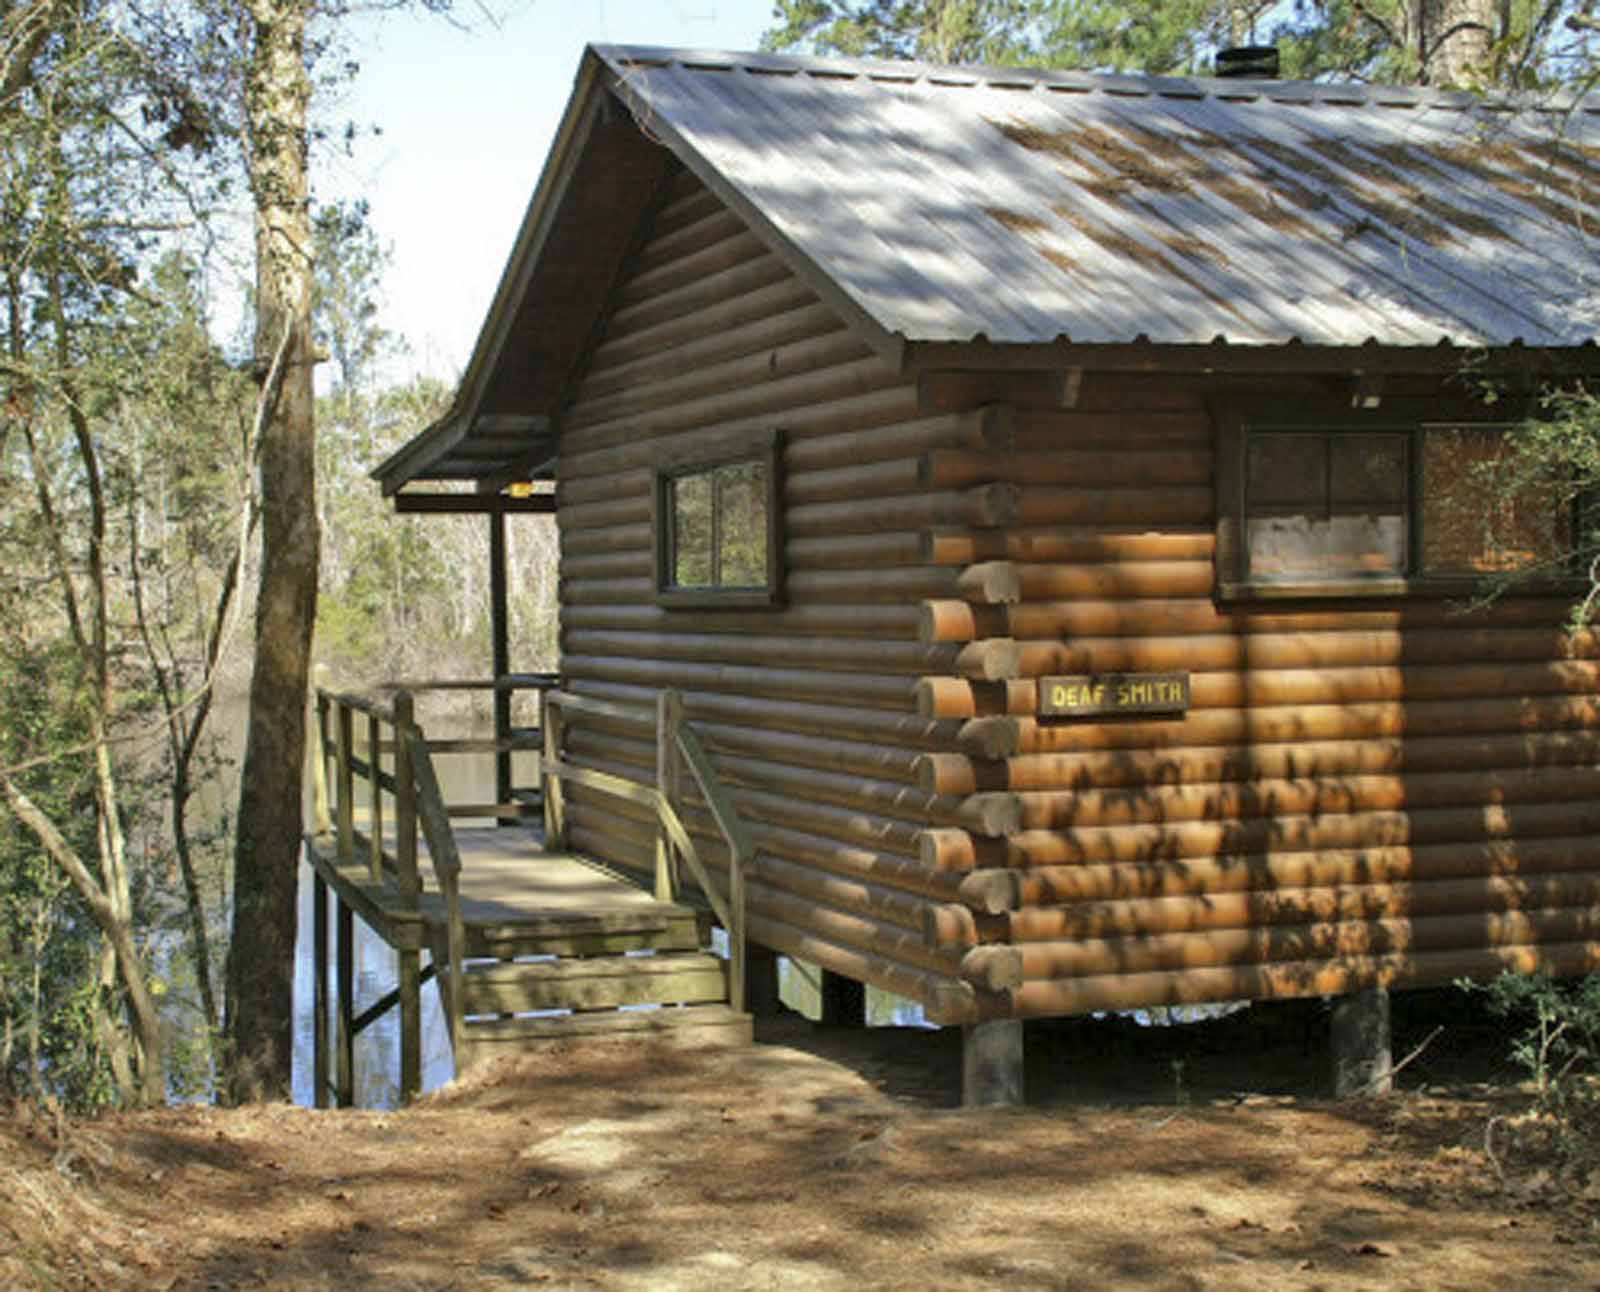 Deaf Smith - One room log cabin